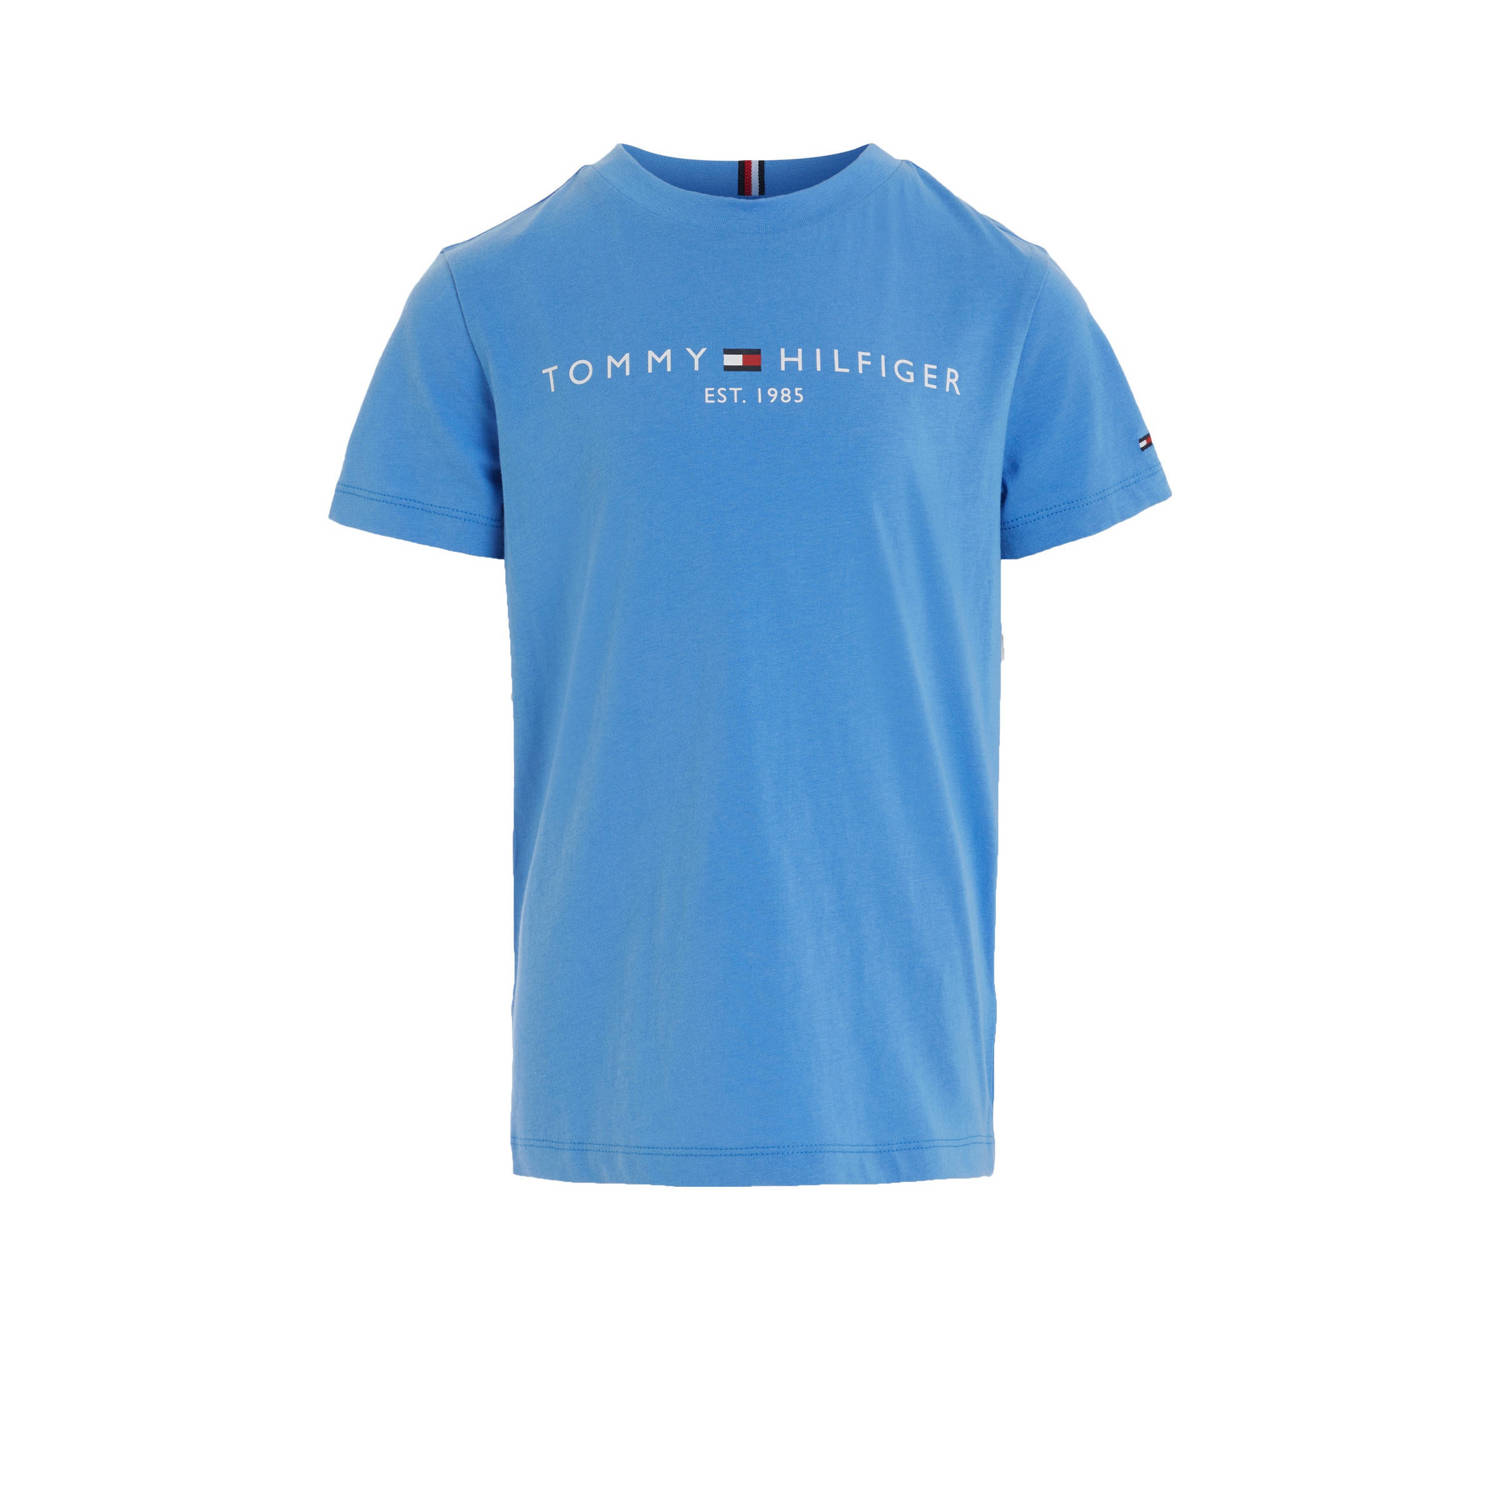 Tommy Hilfiger T-shirt met logo blauw Katoen Ronde hals 104